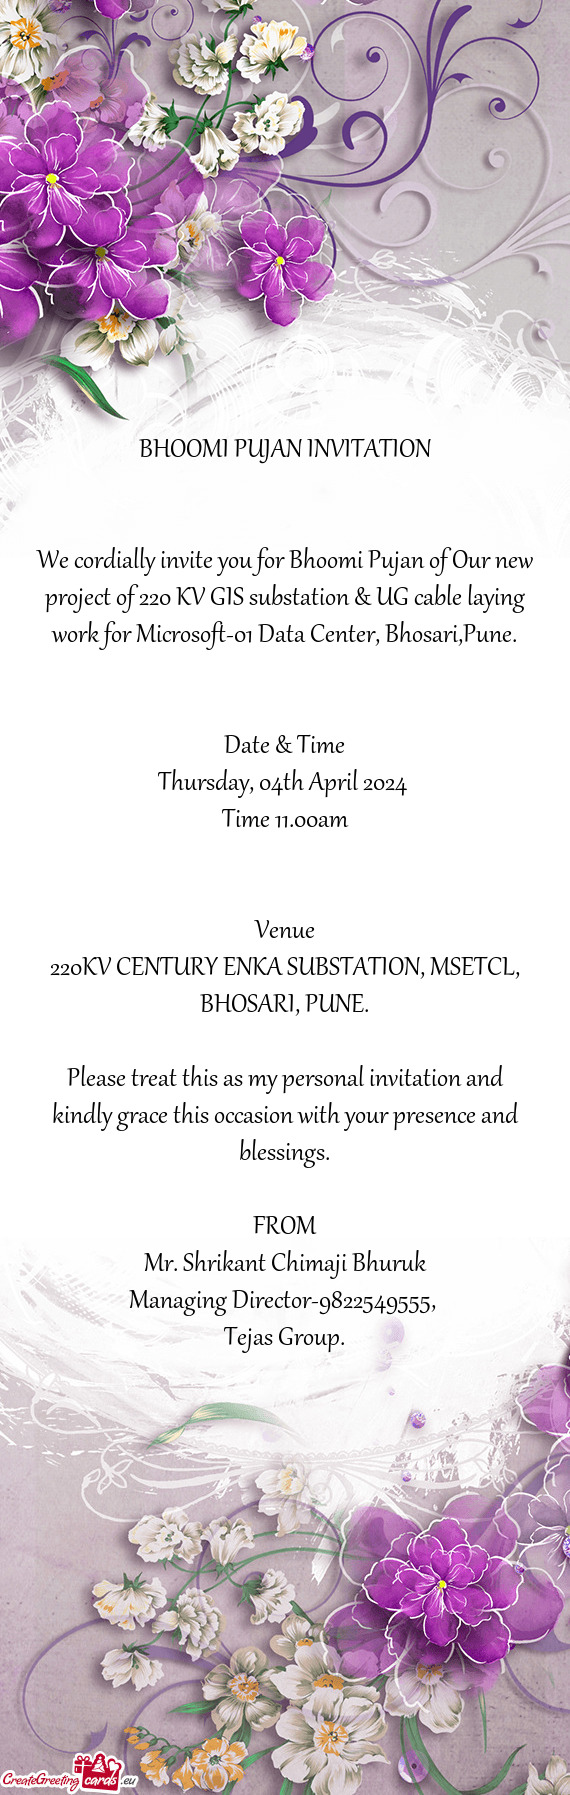 Ng work for Microsoft-01 Data Center, Bhosari,Pune